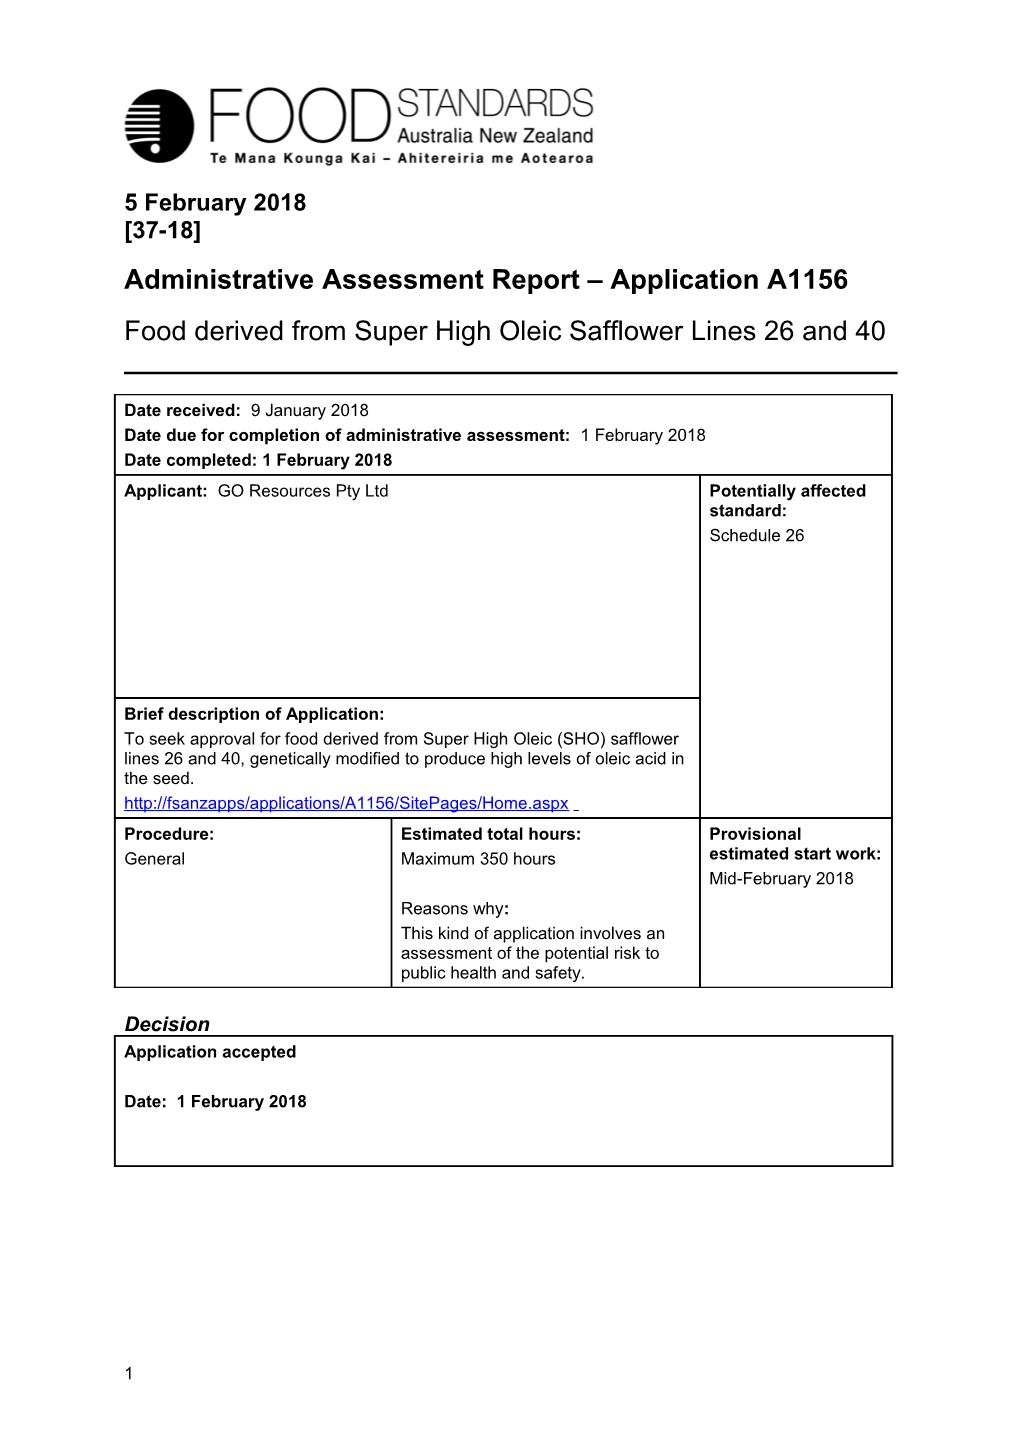 Administrative Assessment Report Applicationa1156